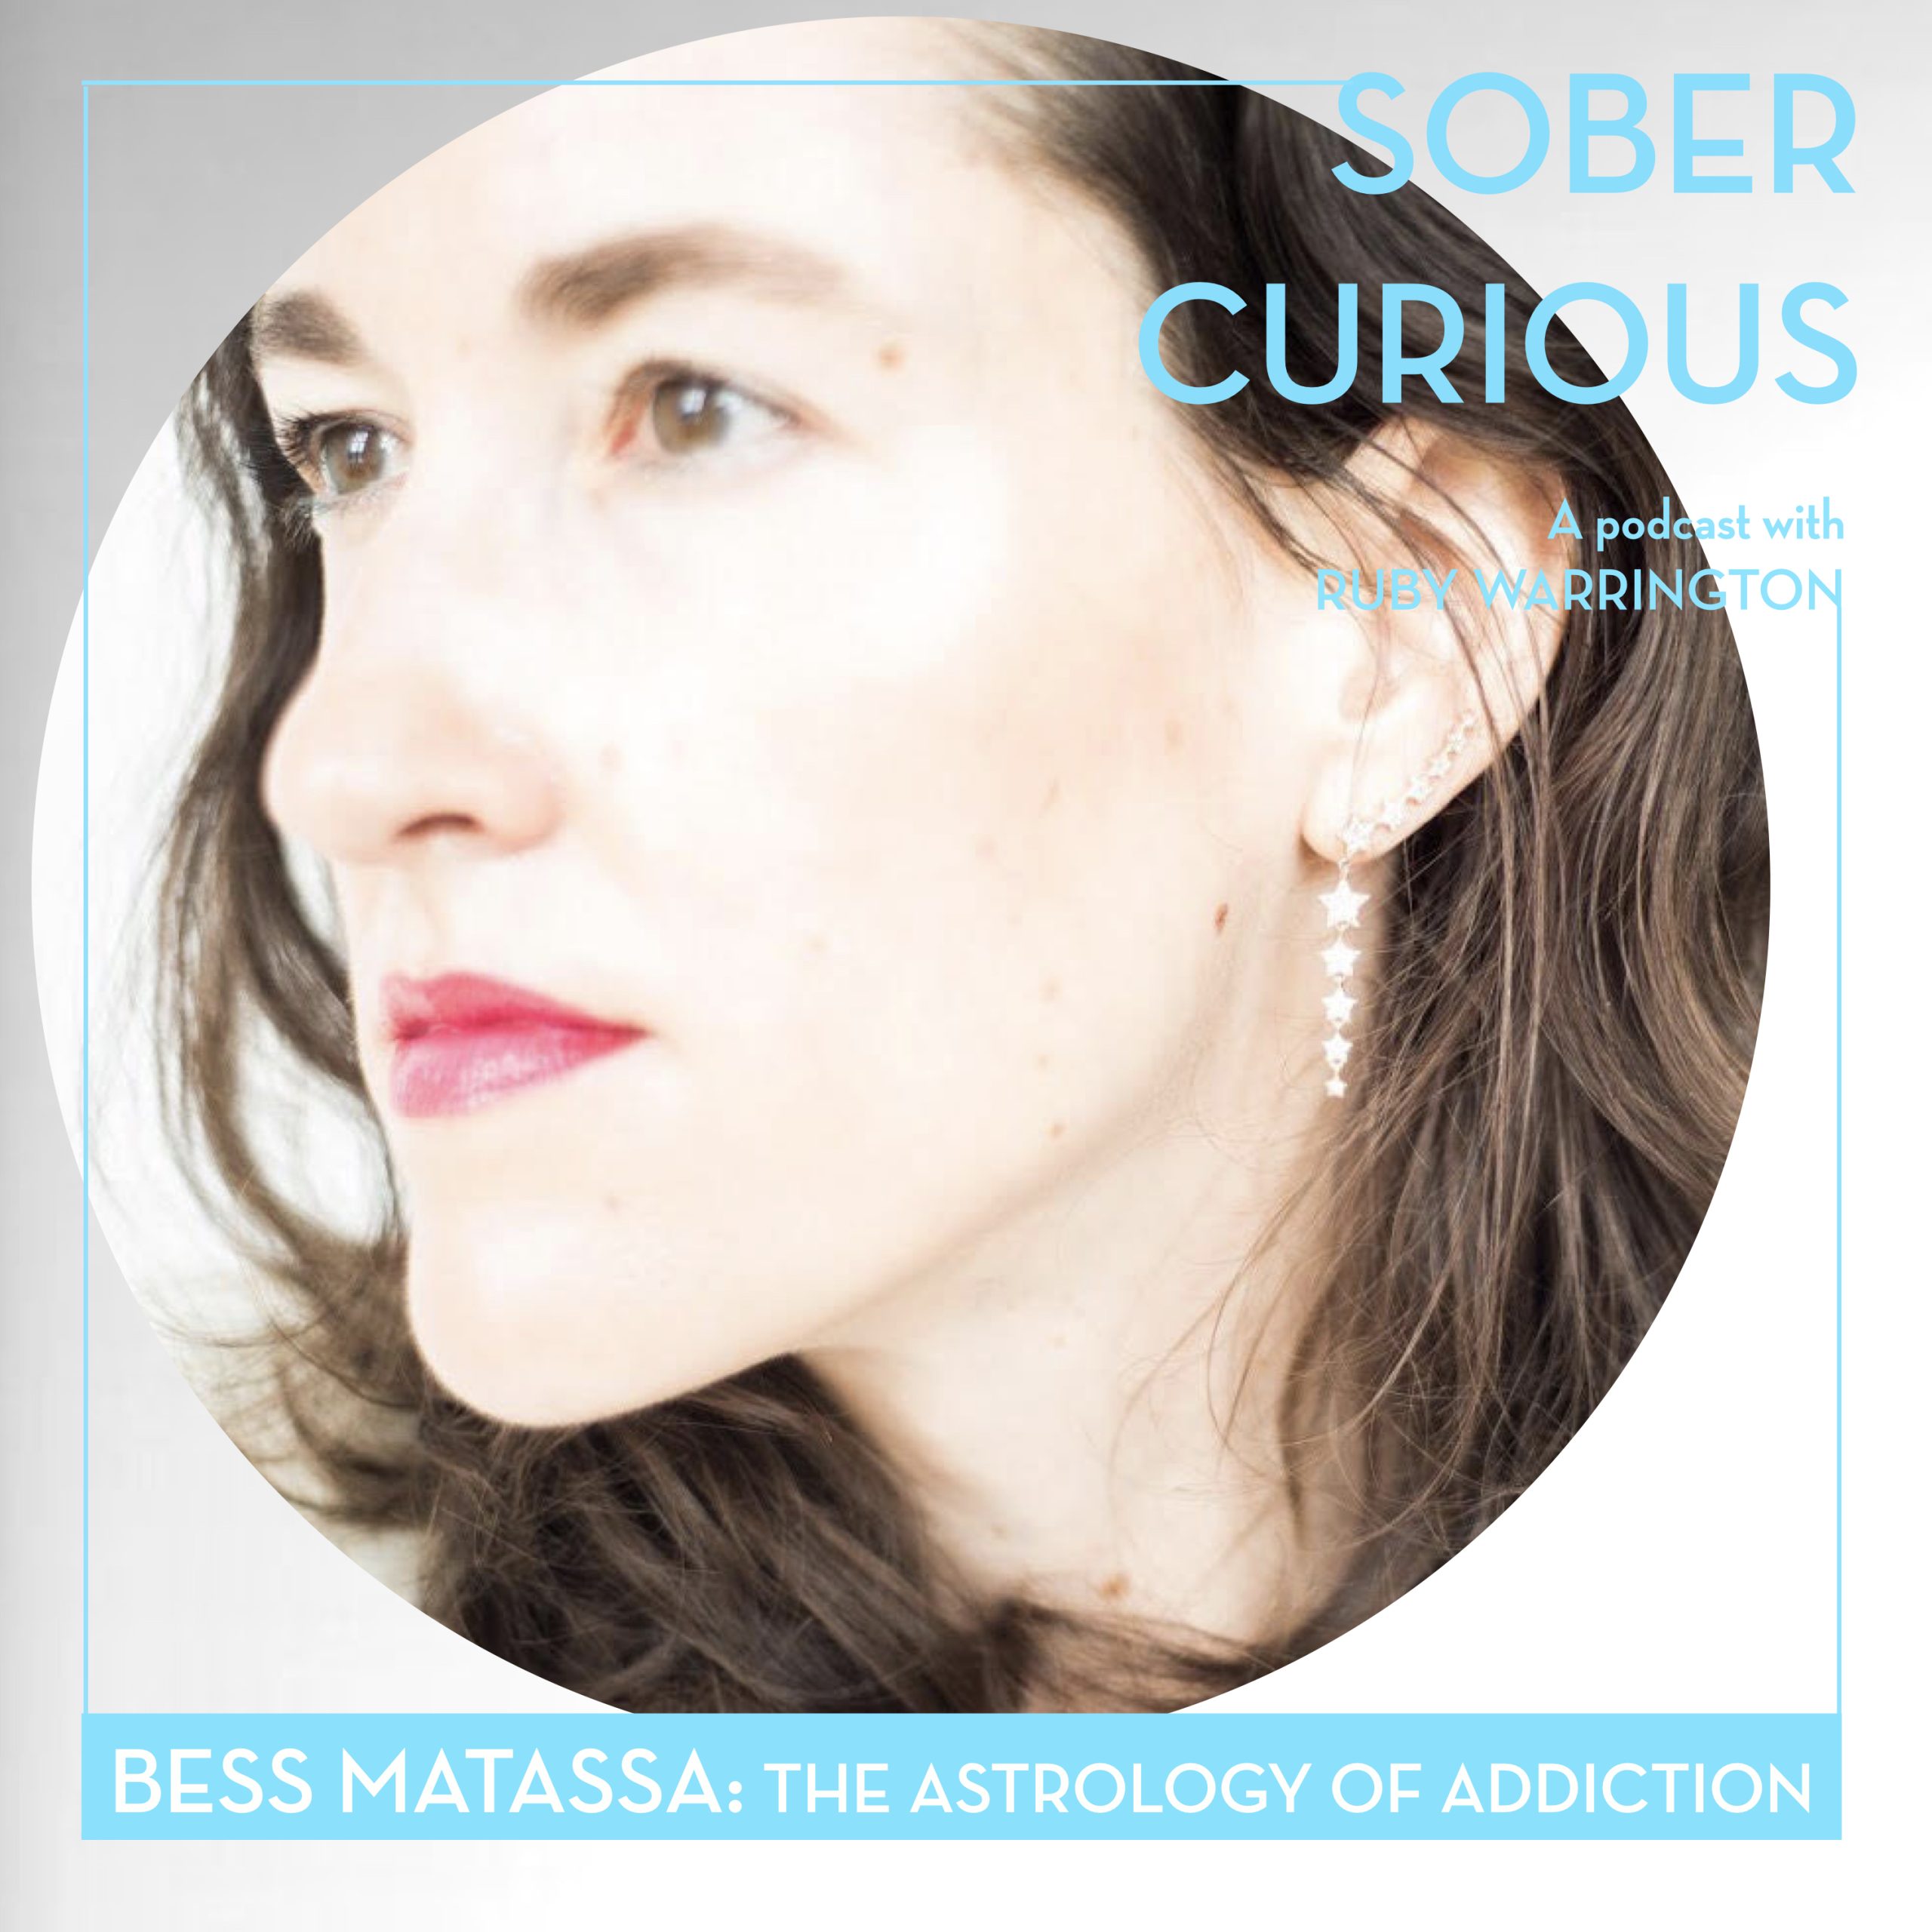 Bess Matassa astrology of addiction sober curious podcast ruby warrington